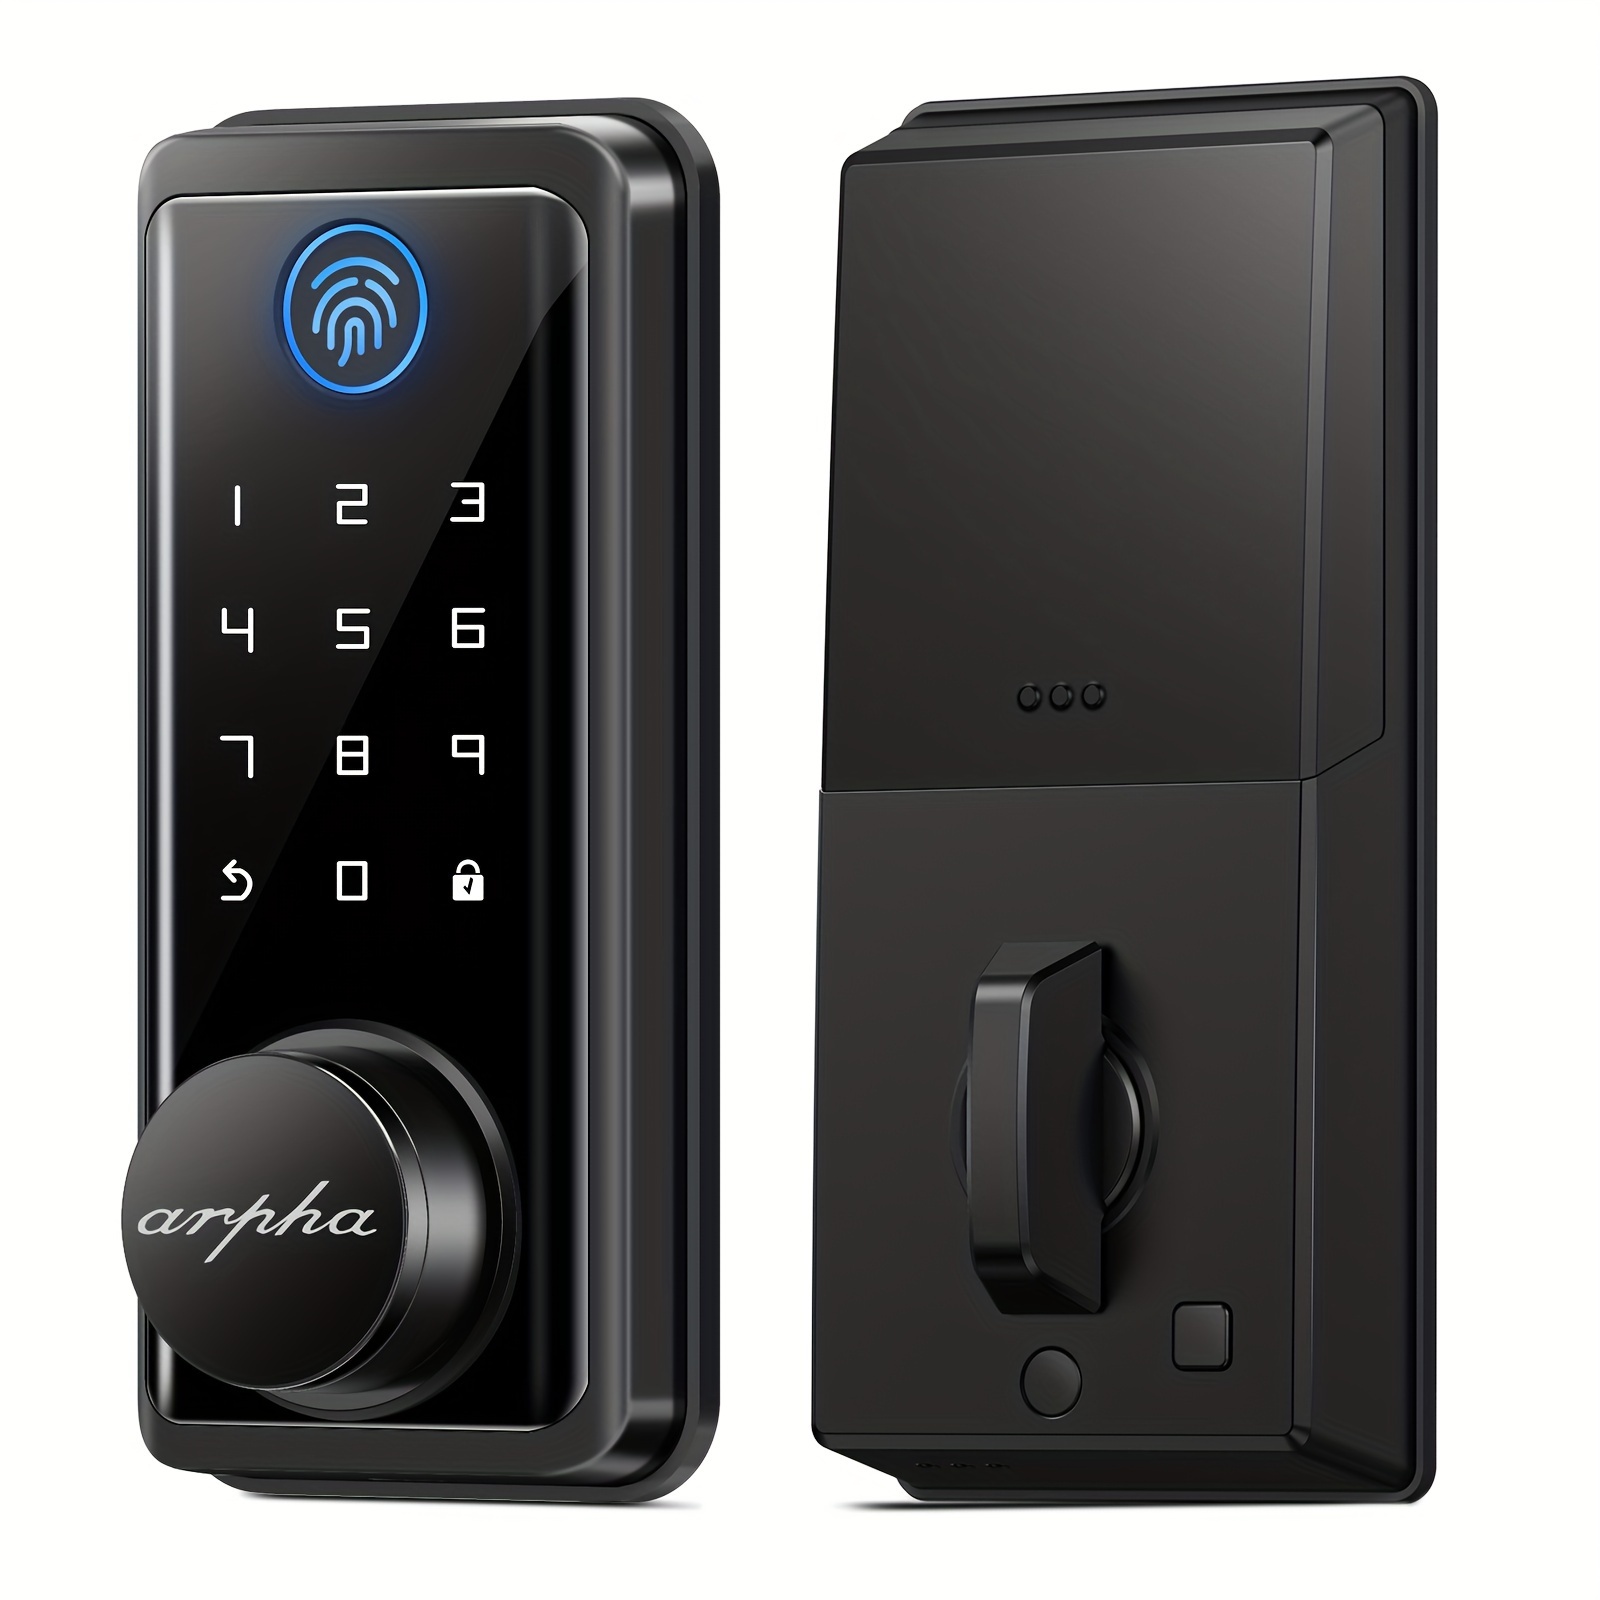 

Keyless Entry Smart Door Lock, Fingerprint Keyless Entry Door Lock With App Control, Front Door Deadbolt With 2 Keys, 100 Codes, Anti-peeking Function, Touchscreen Lock, Easy To Install